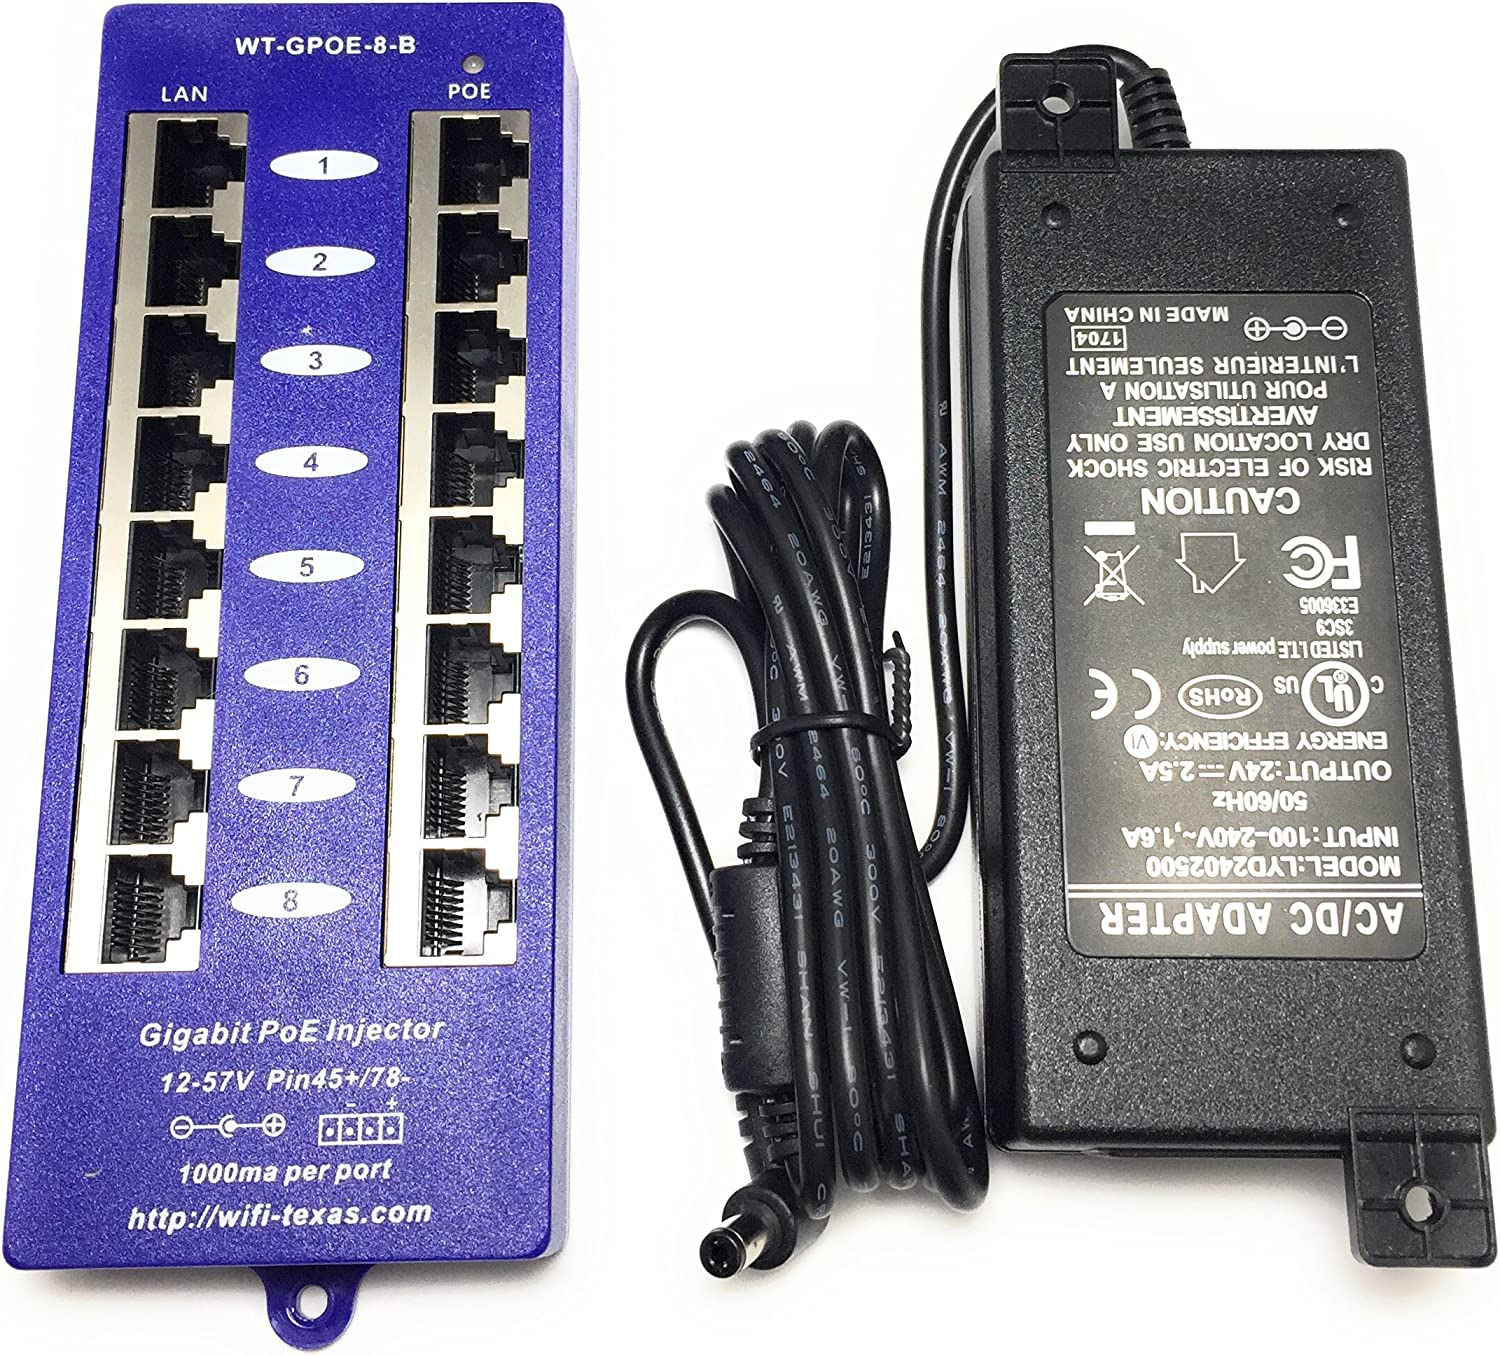 8-Port Gigabit Poe Injector for 24 Volt Passive Devices like Ubiquiti & Mikrotik